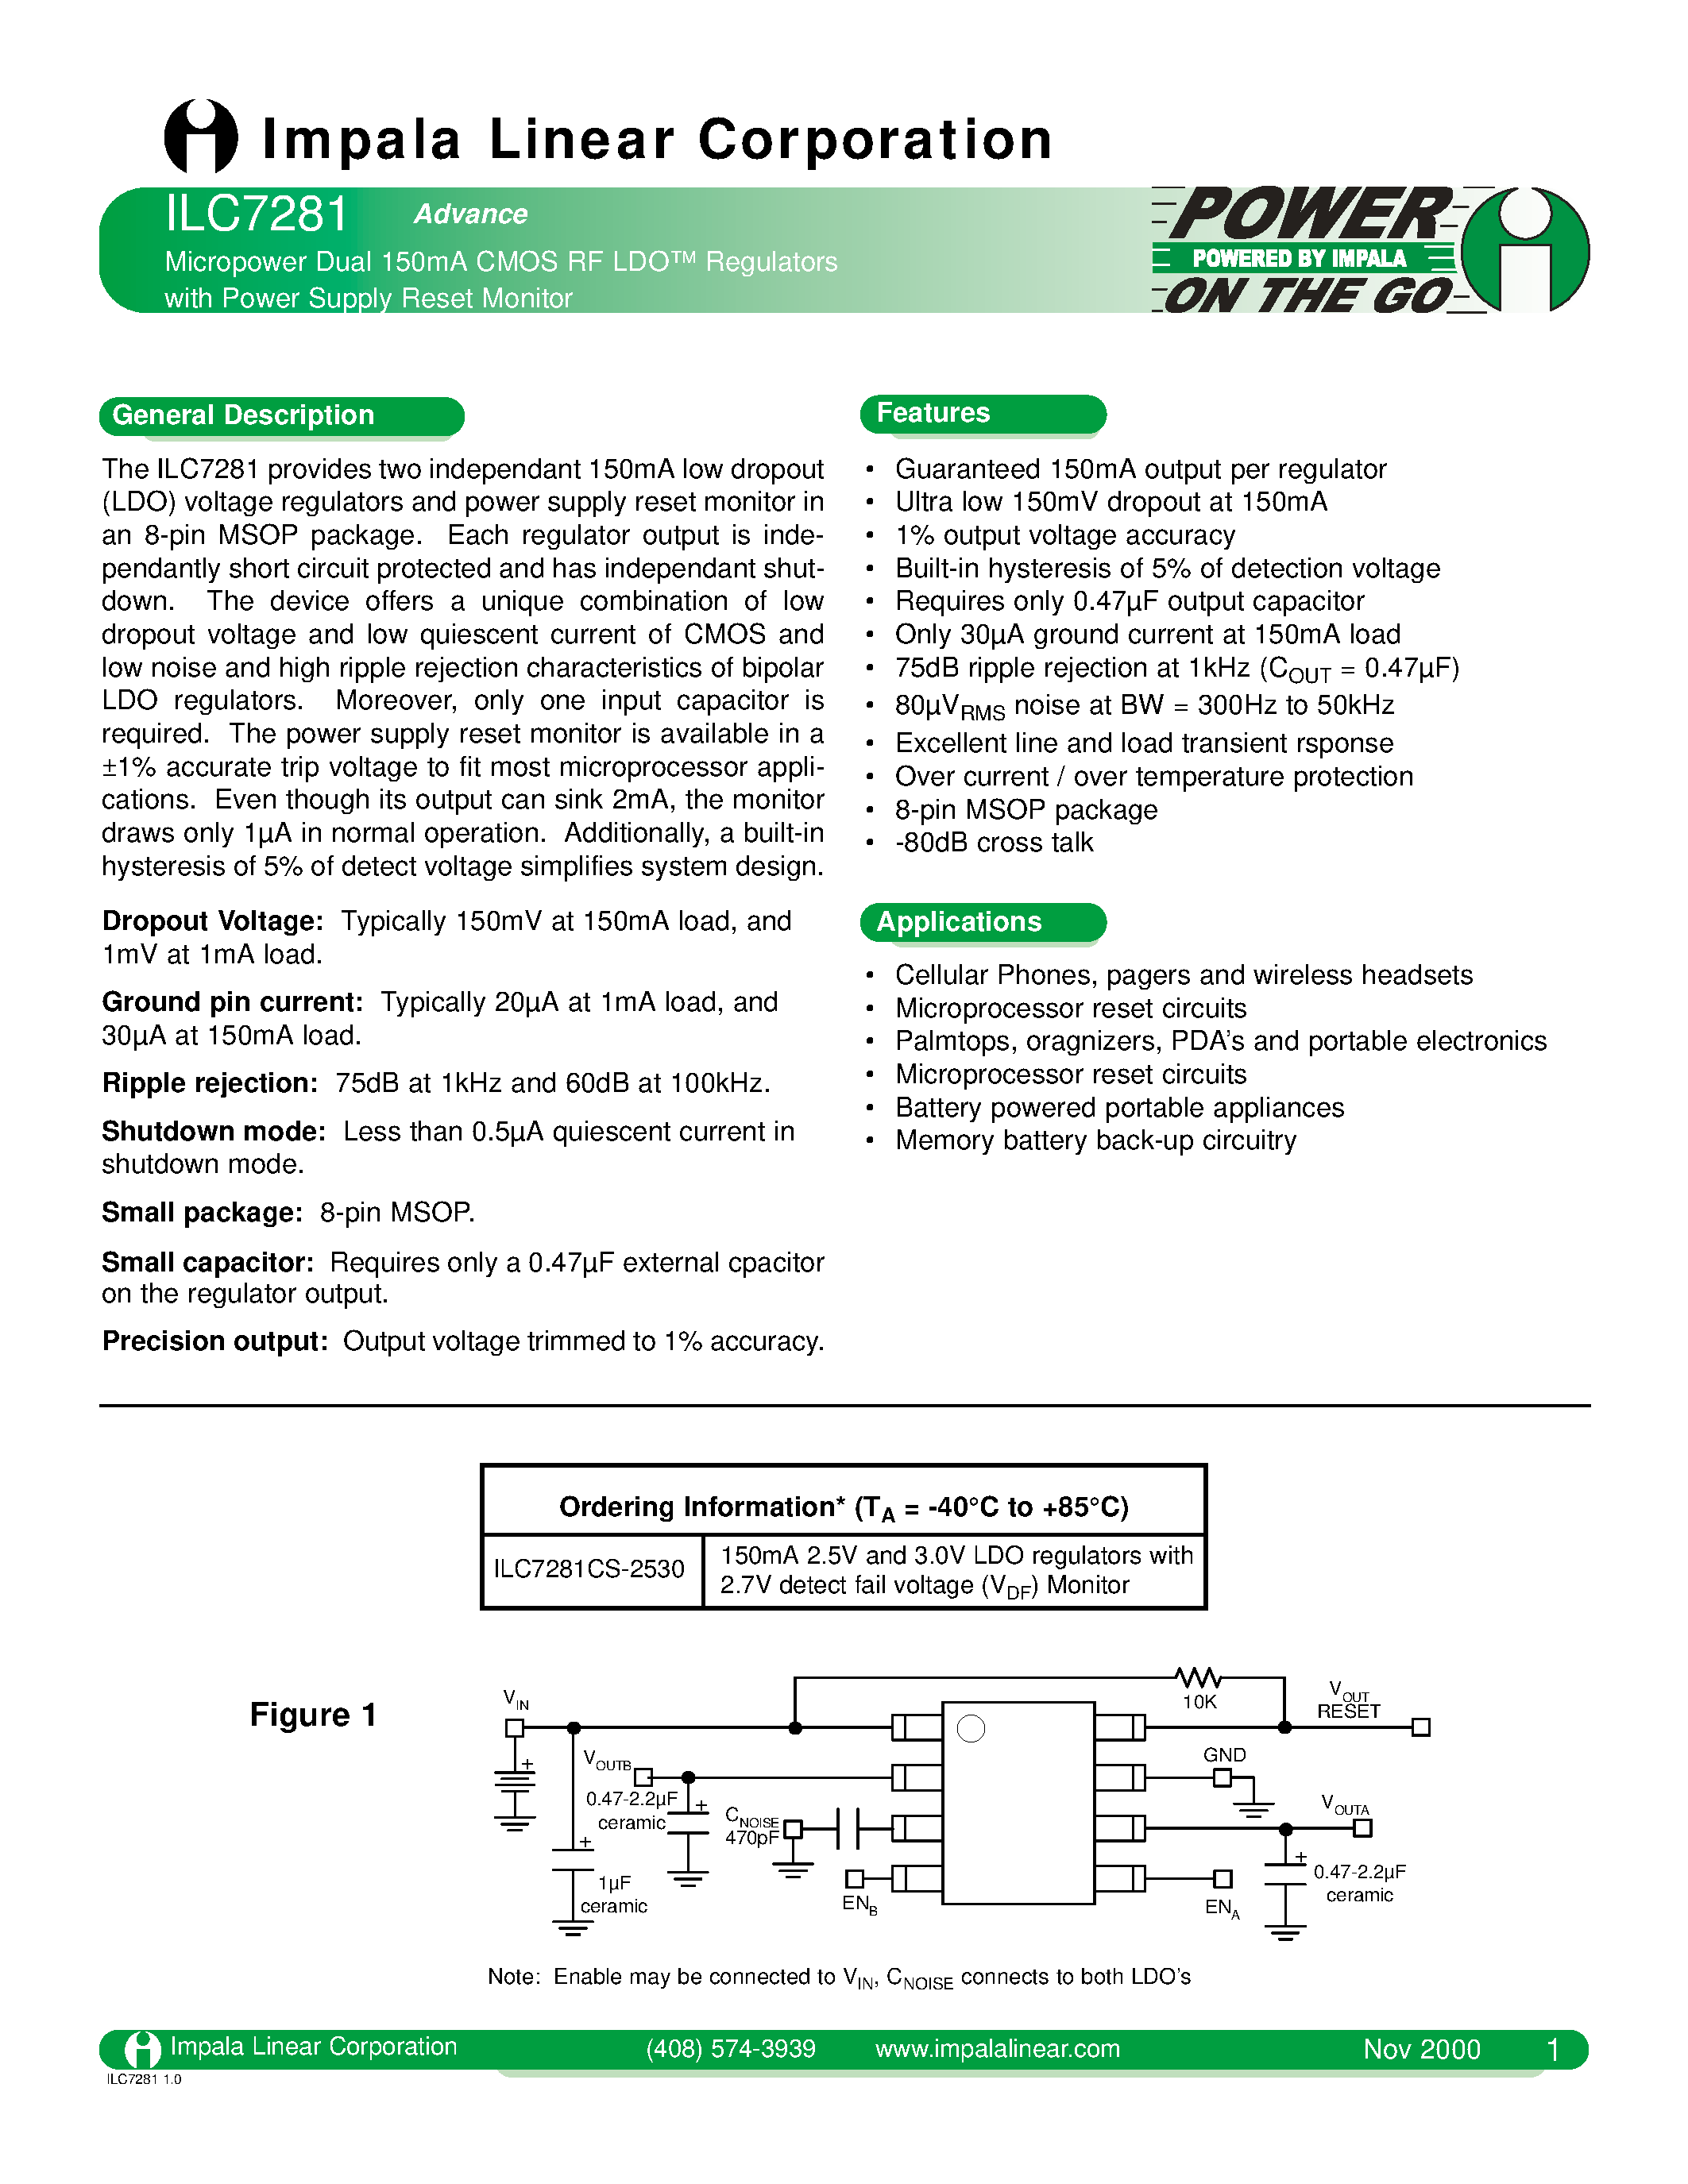 Даташит ILC7281 - MICROPOWER DUAL 150MA CMOS RF LDO REGULATORS WITH POWER SUPPLY RESET MONITOR страница 1